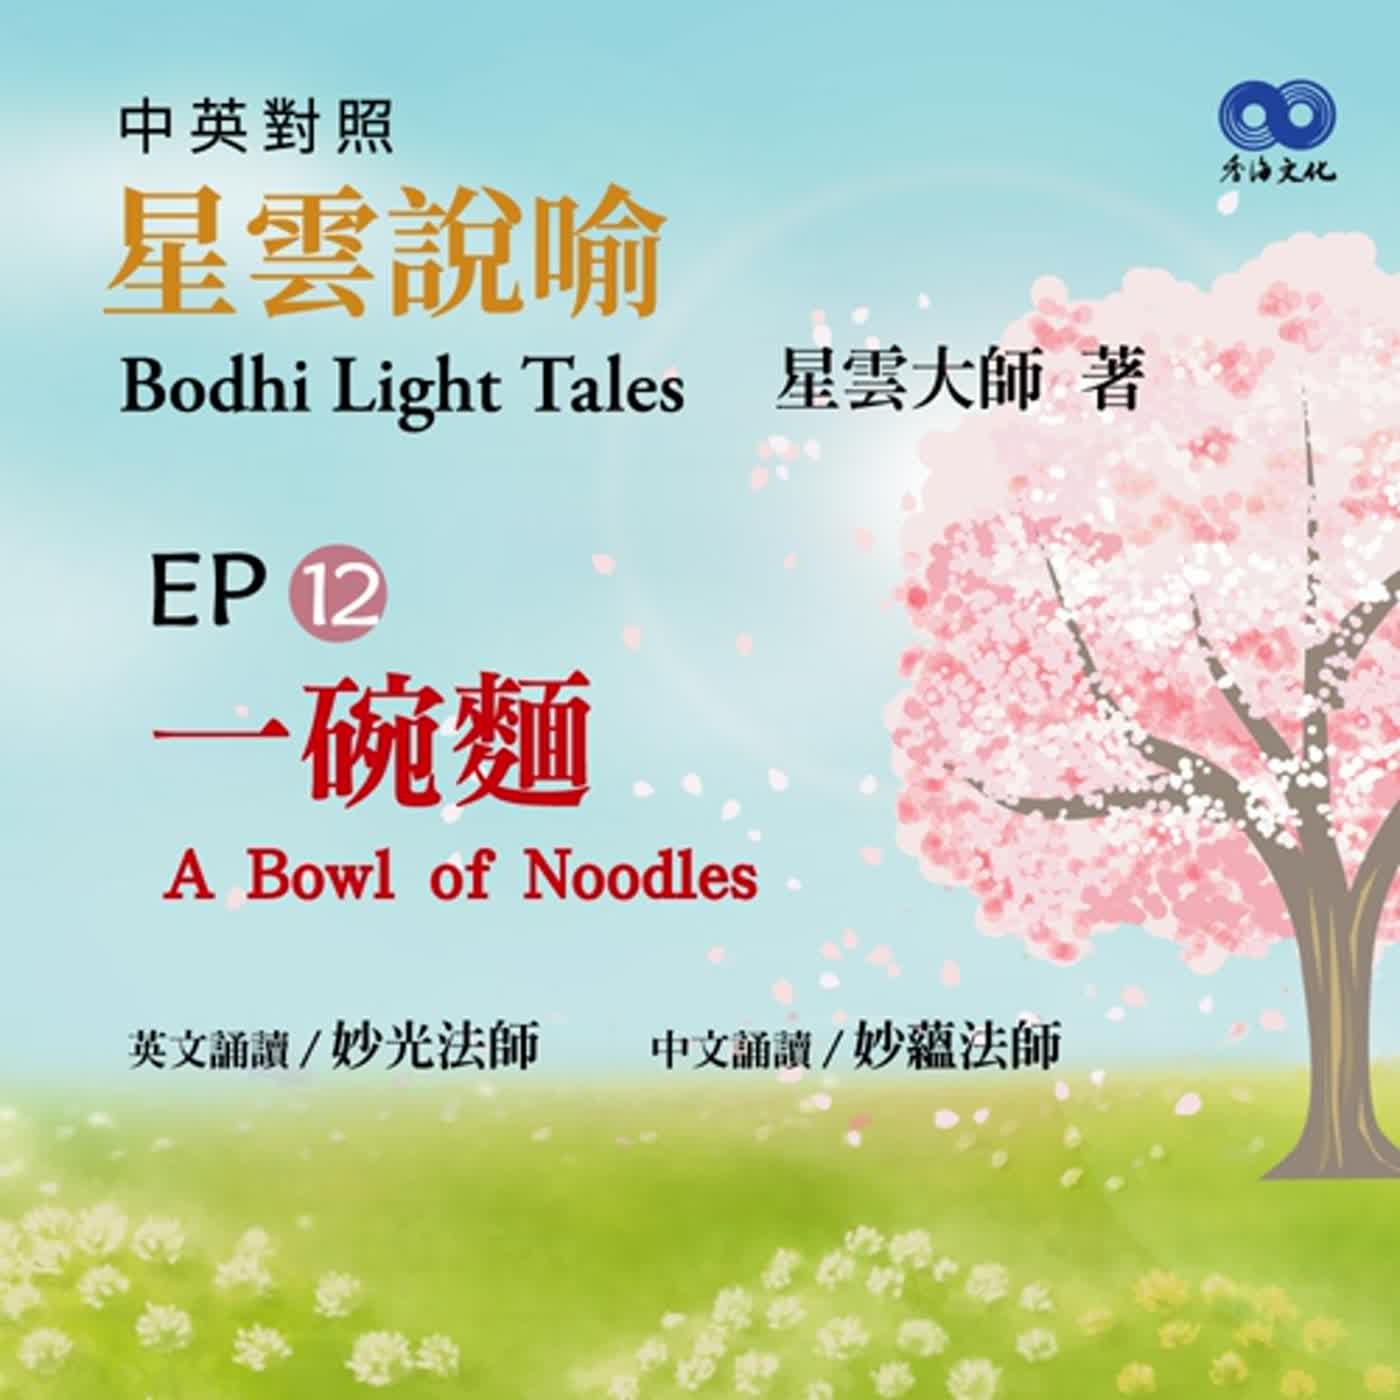 「Fun香」閱讀星雲大師系列著作~《星雲說喻 Bodhi Light Tales:Volume 1》 EP12 -一碗麵 A Bowl of Noodles